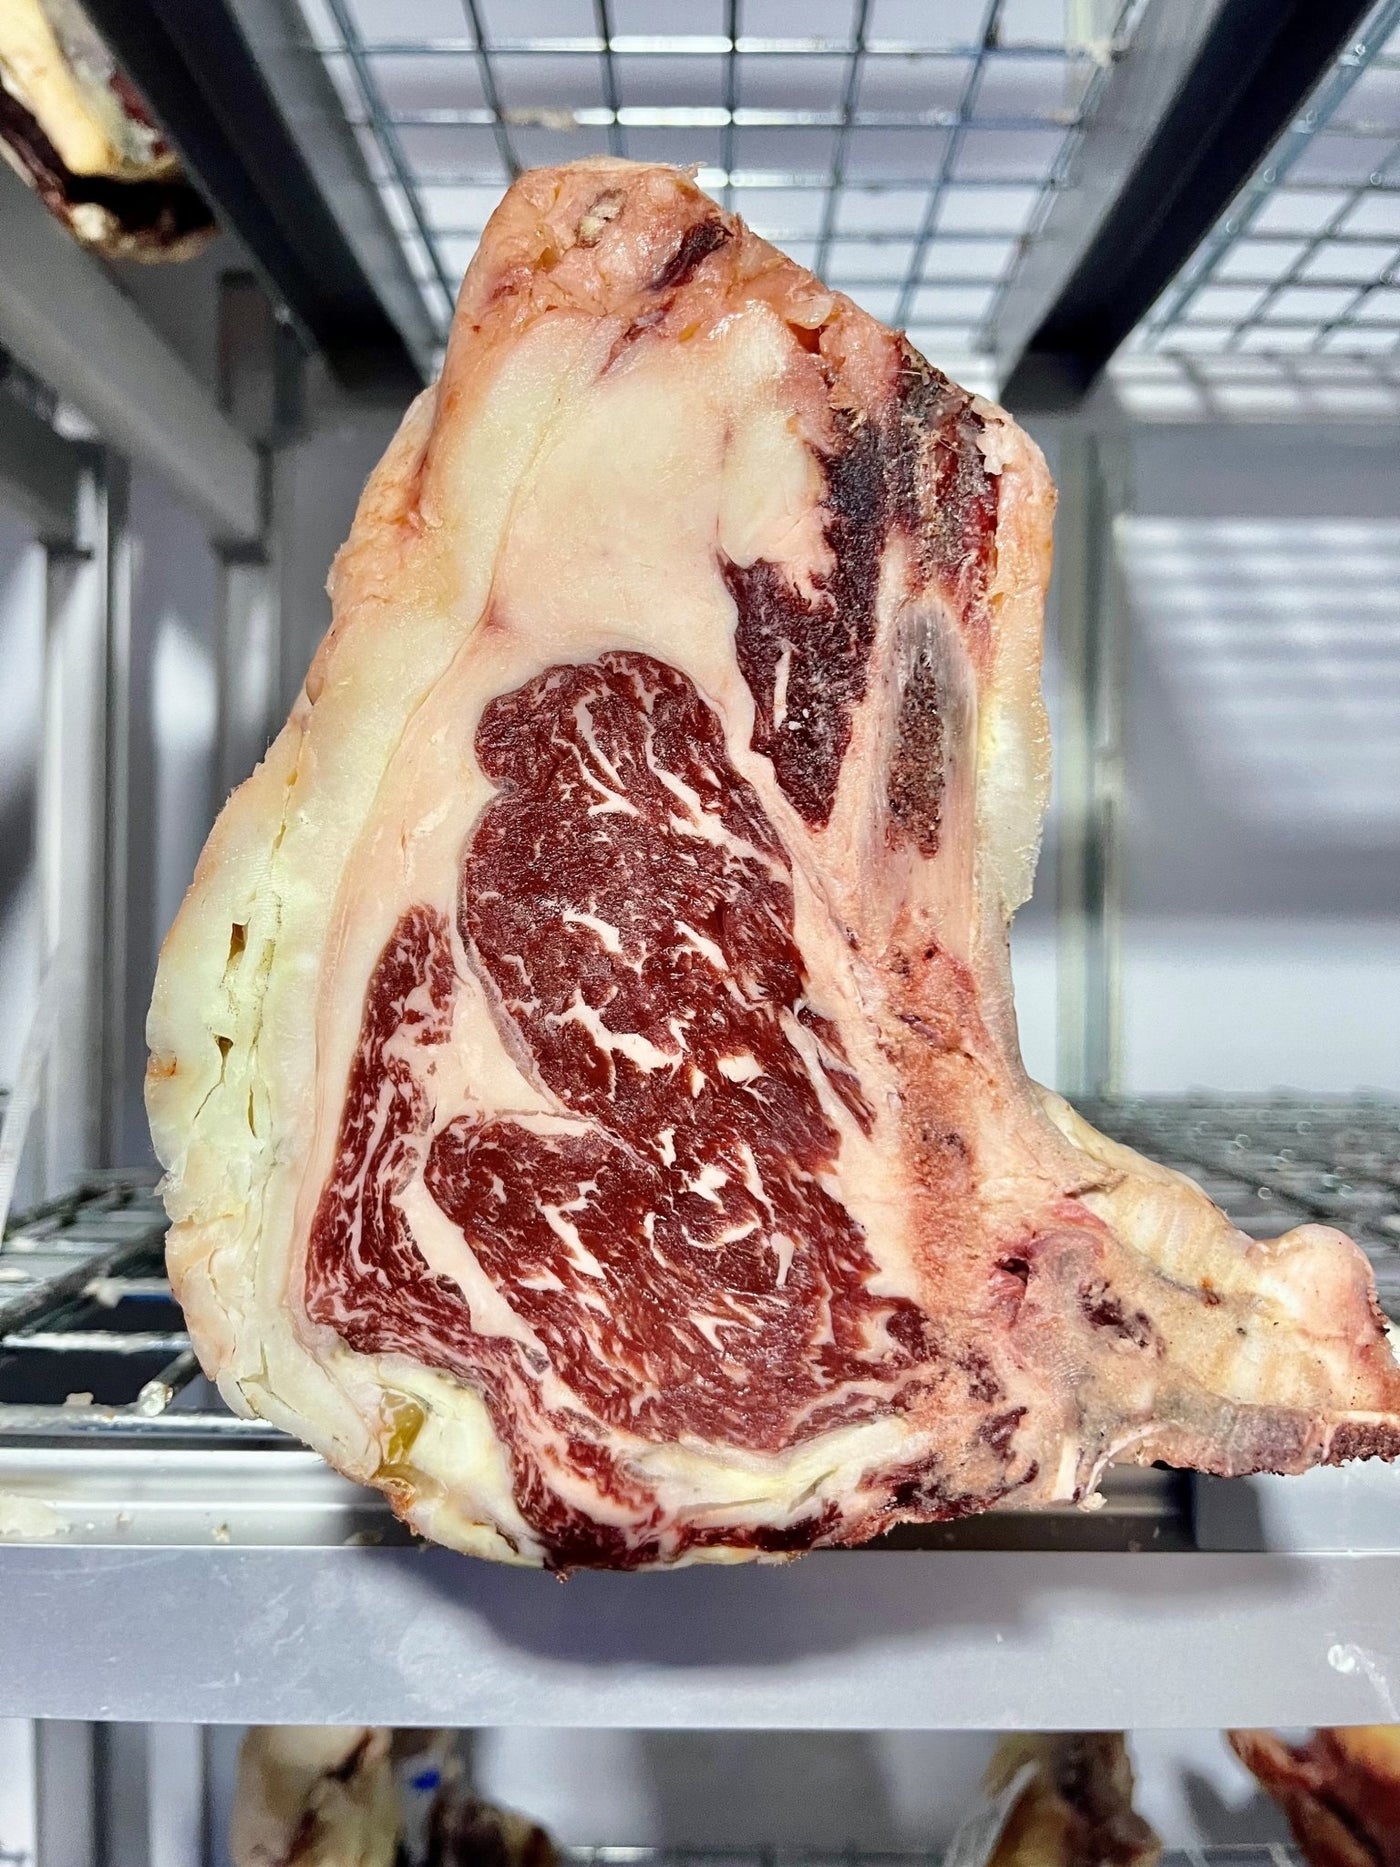 50 Day Dry-Aged Dexter - Thomas Joseph Butchery - Ethical Dry-Aged Meat The Best Steak UK Thomas Joseph Butchery